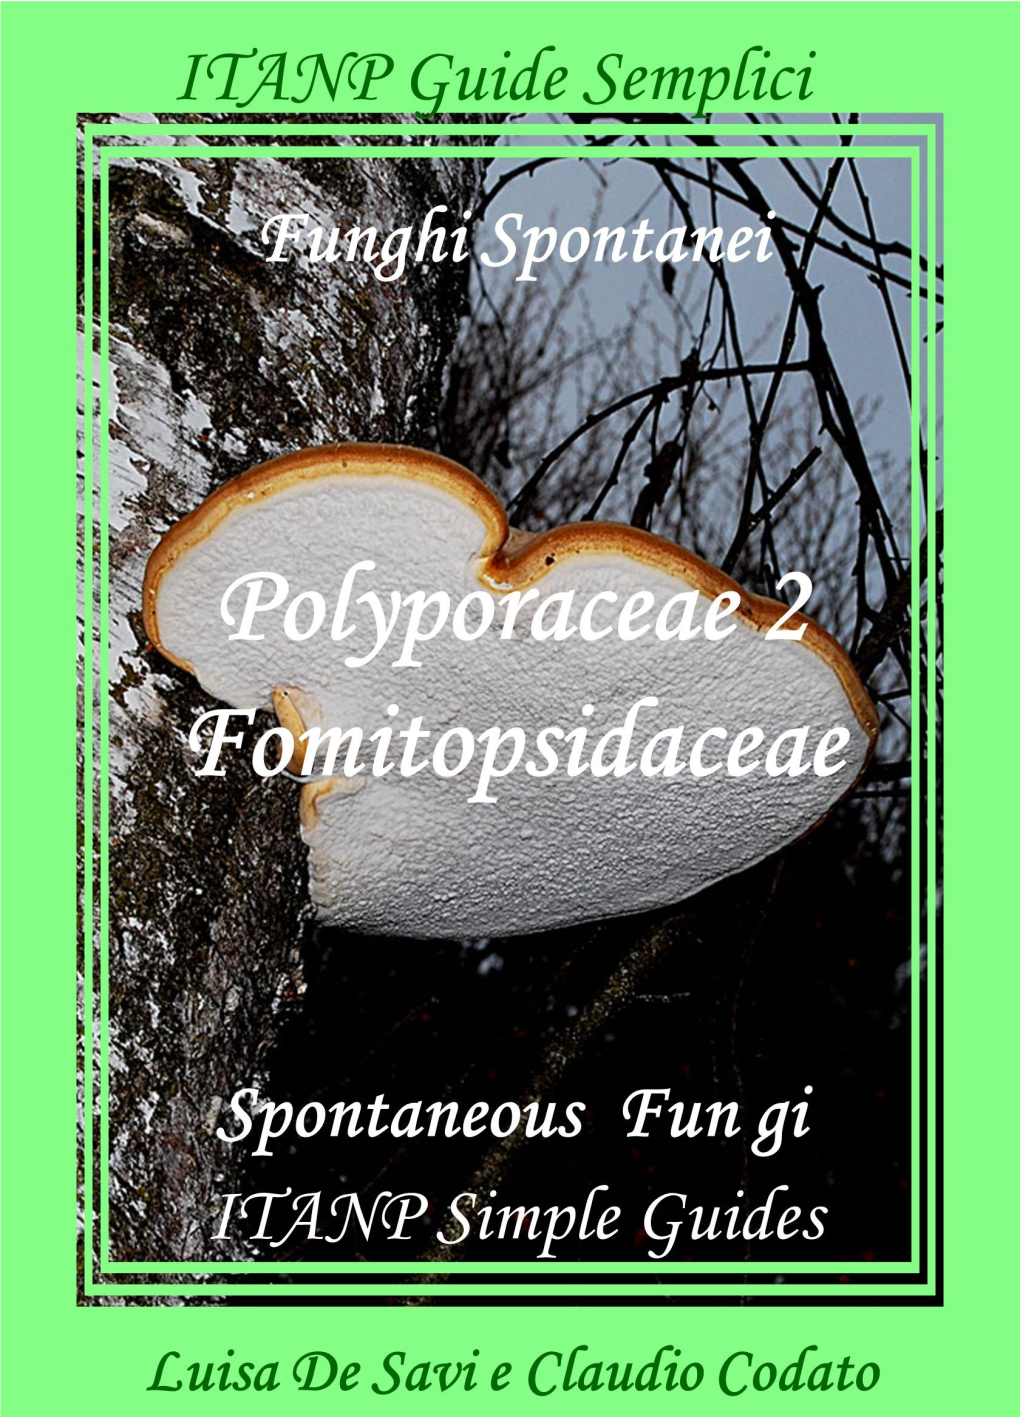 Guida Polyporaceae 2 Fomitopsidaceae 2 0.Pdf